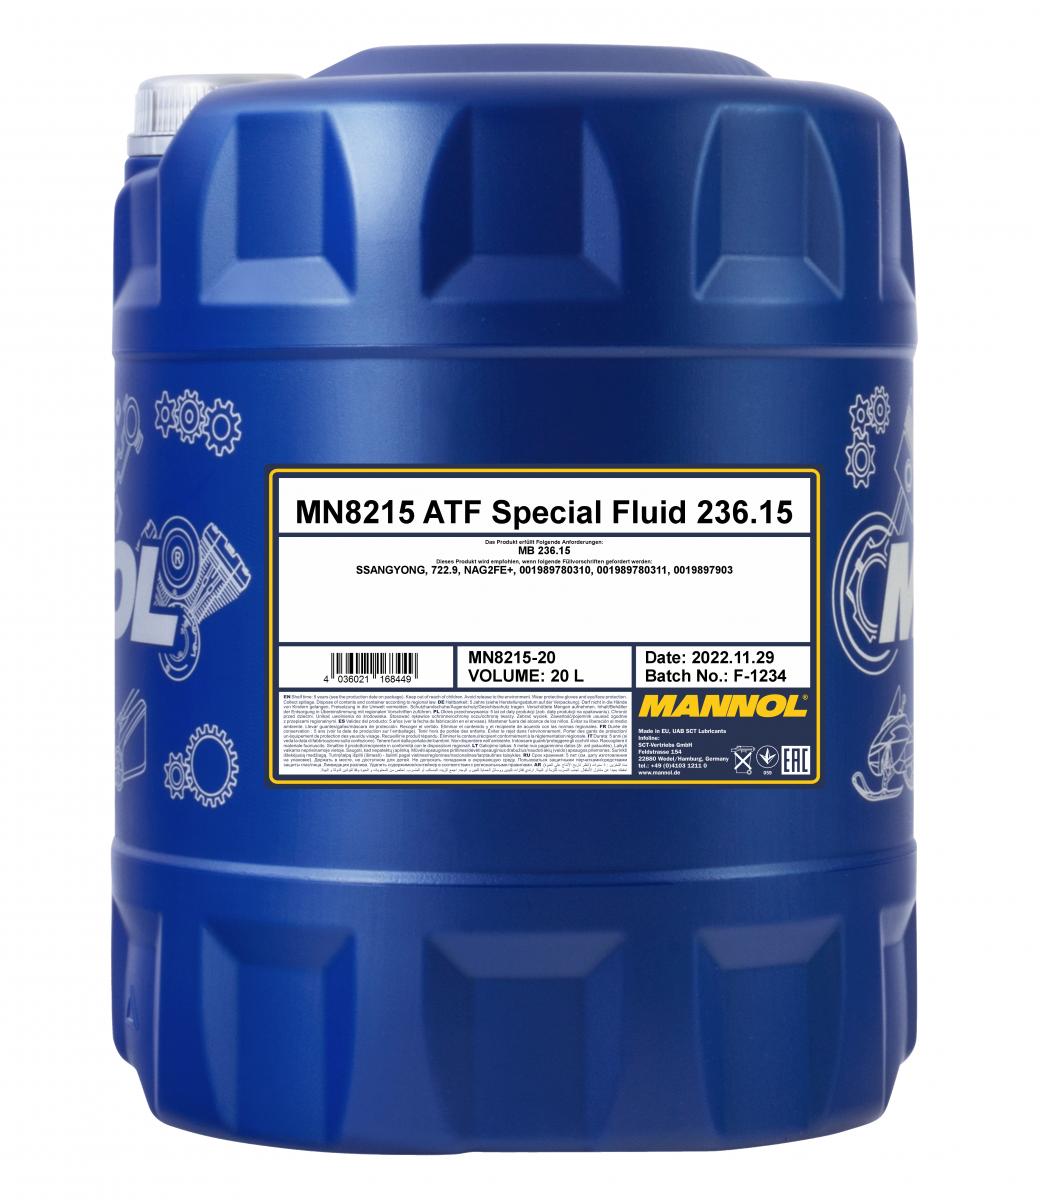 20 Liter MANNOL ATF Special Fluid MB 236.15 MN8215-20